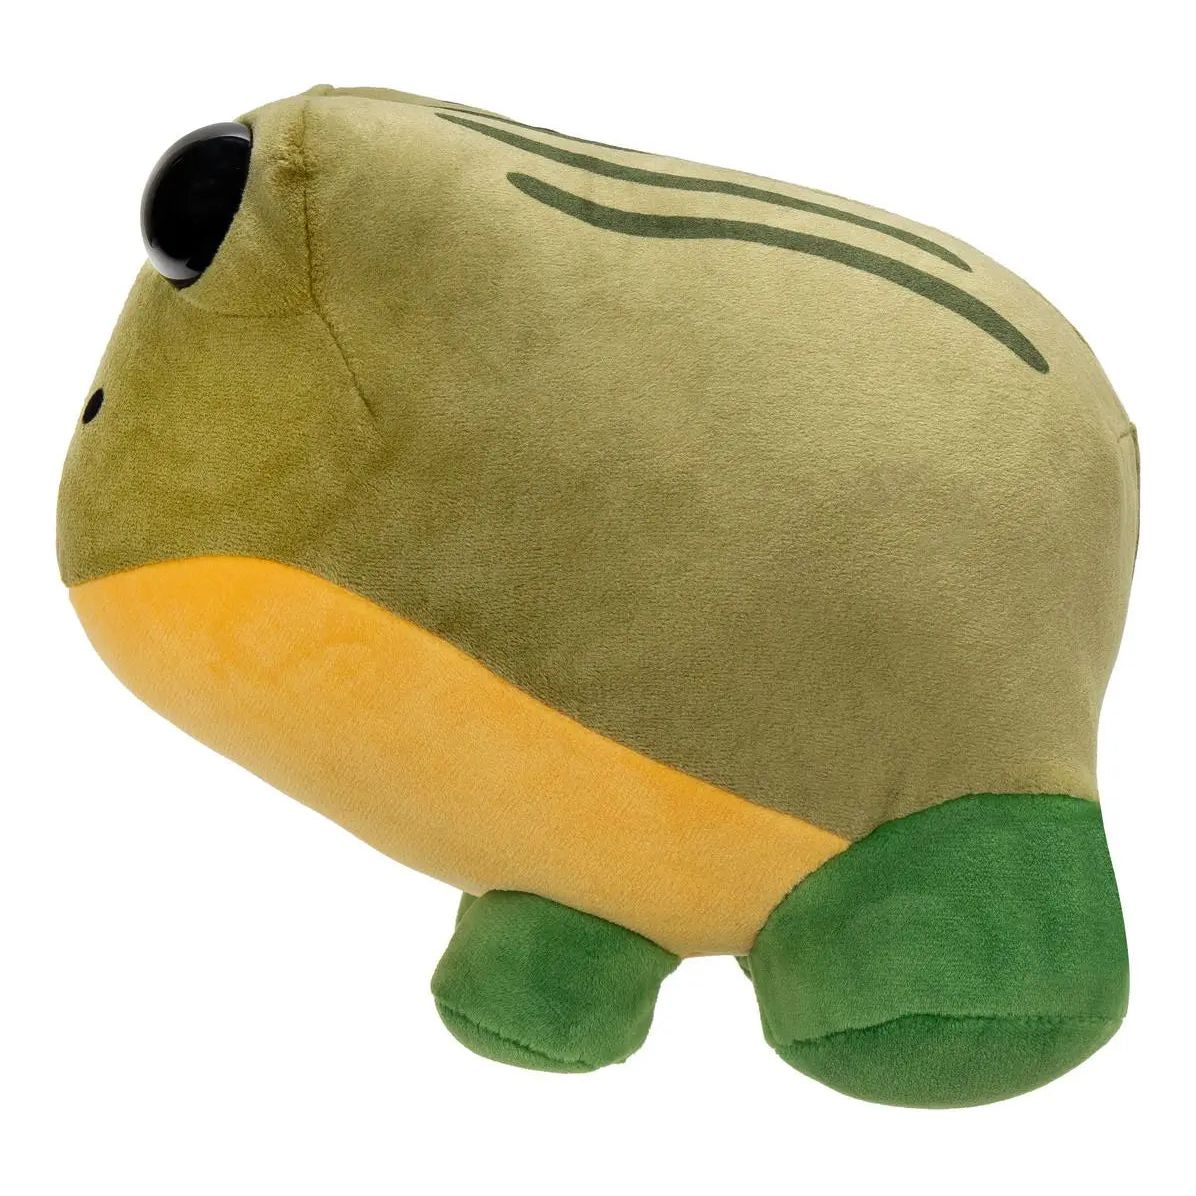 Adopt Me Collector Plush Bullfrog Adopt Me